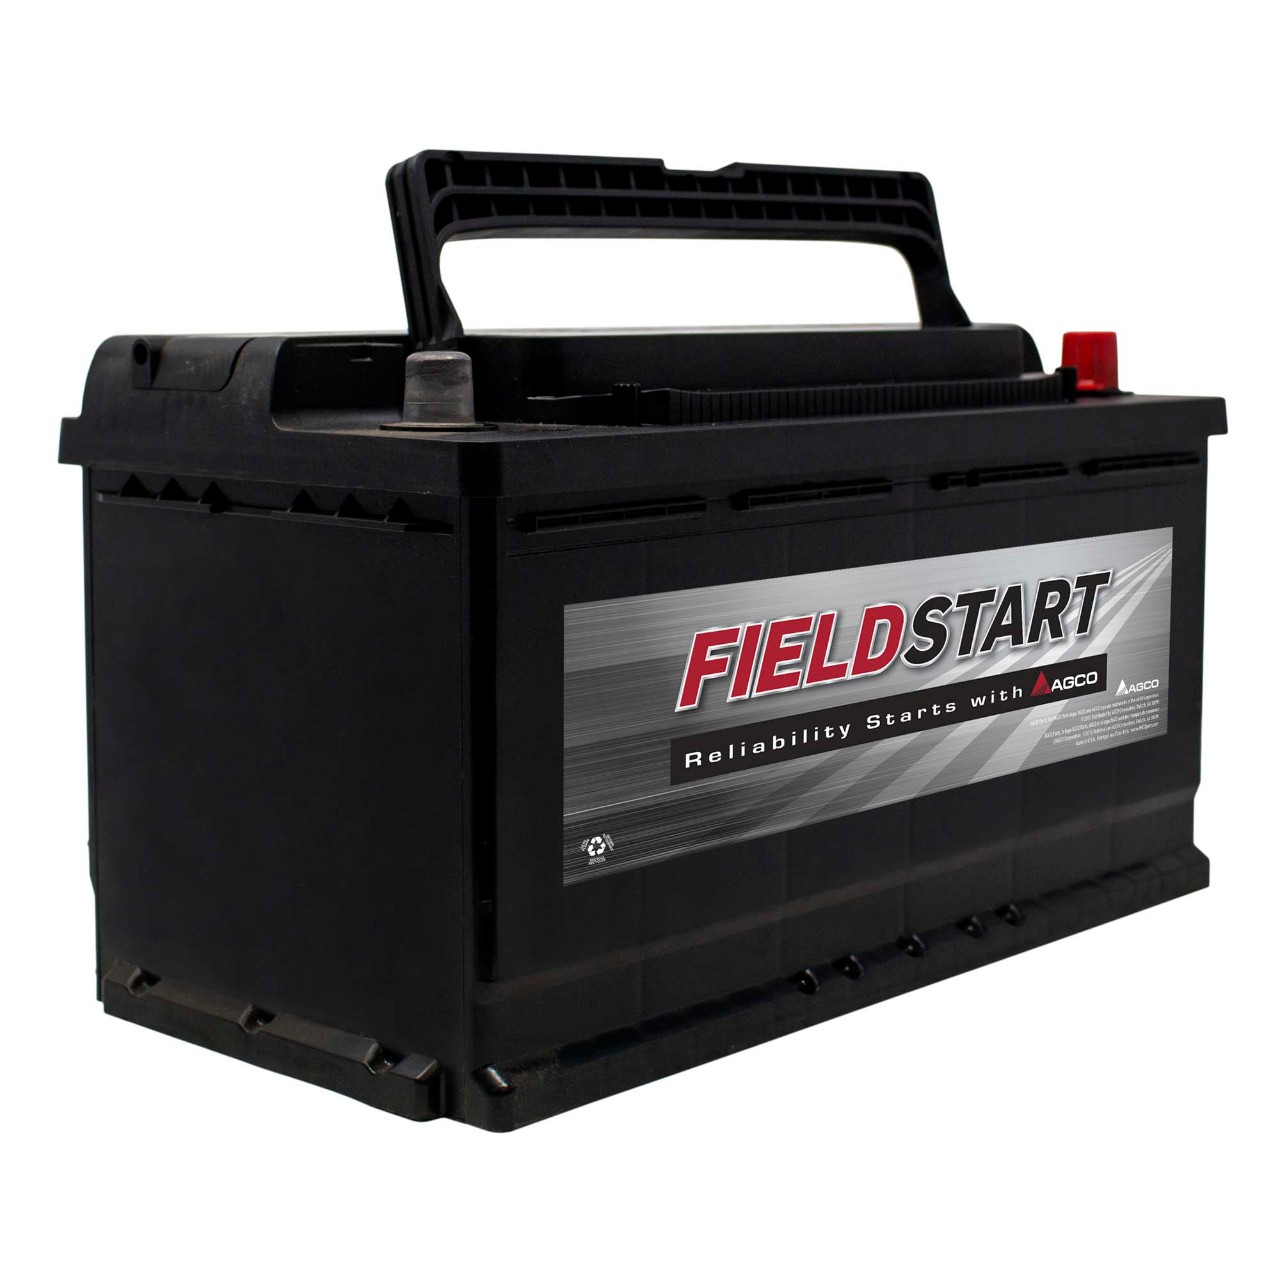 AGCO FieldStart Battery